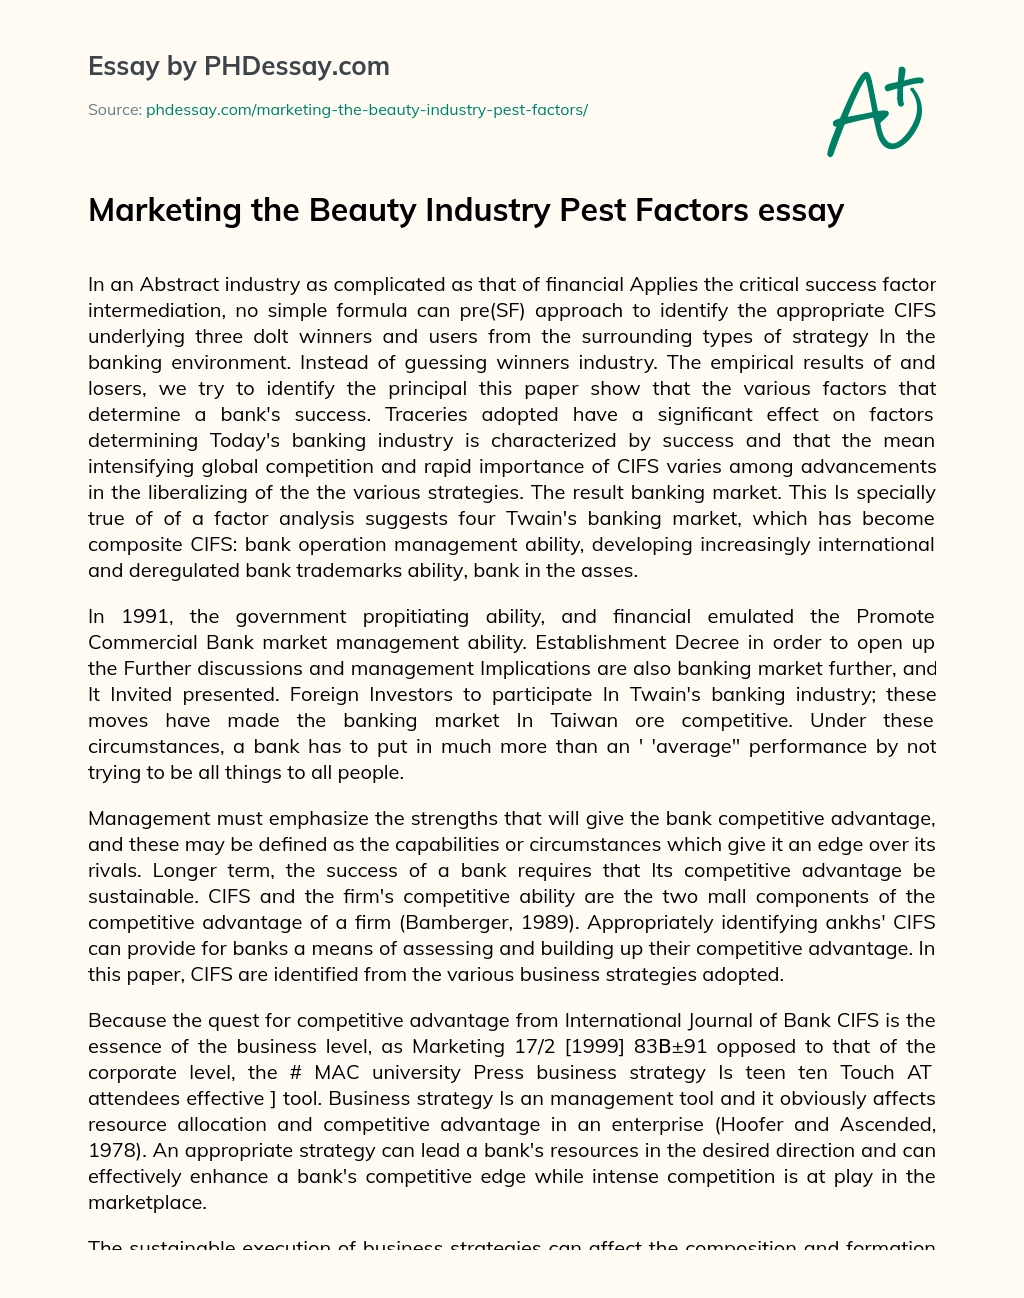 Marketing the Beauty Industry Pest Factors essay essay